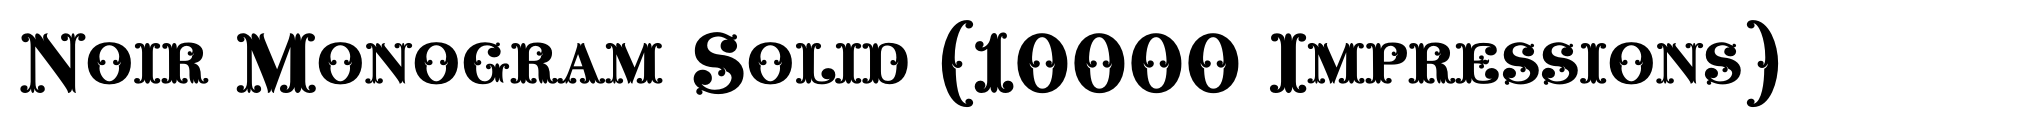 Noir Monogram Solid (10000 Impressions) image